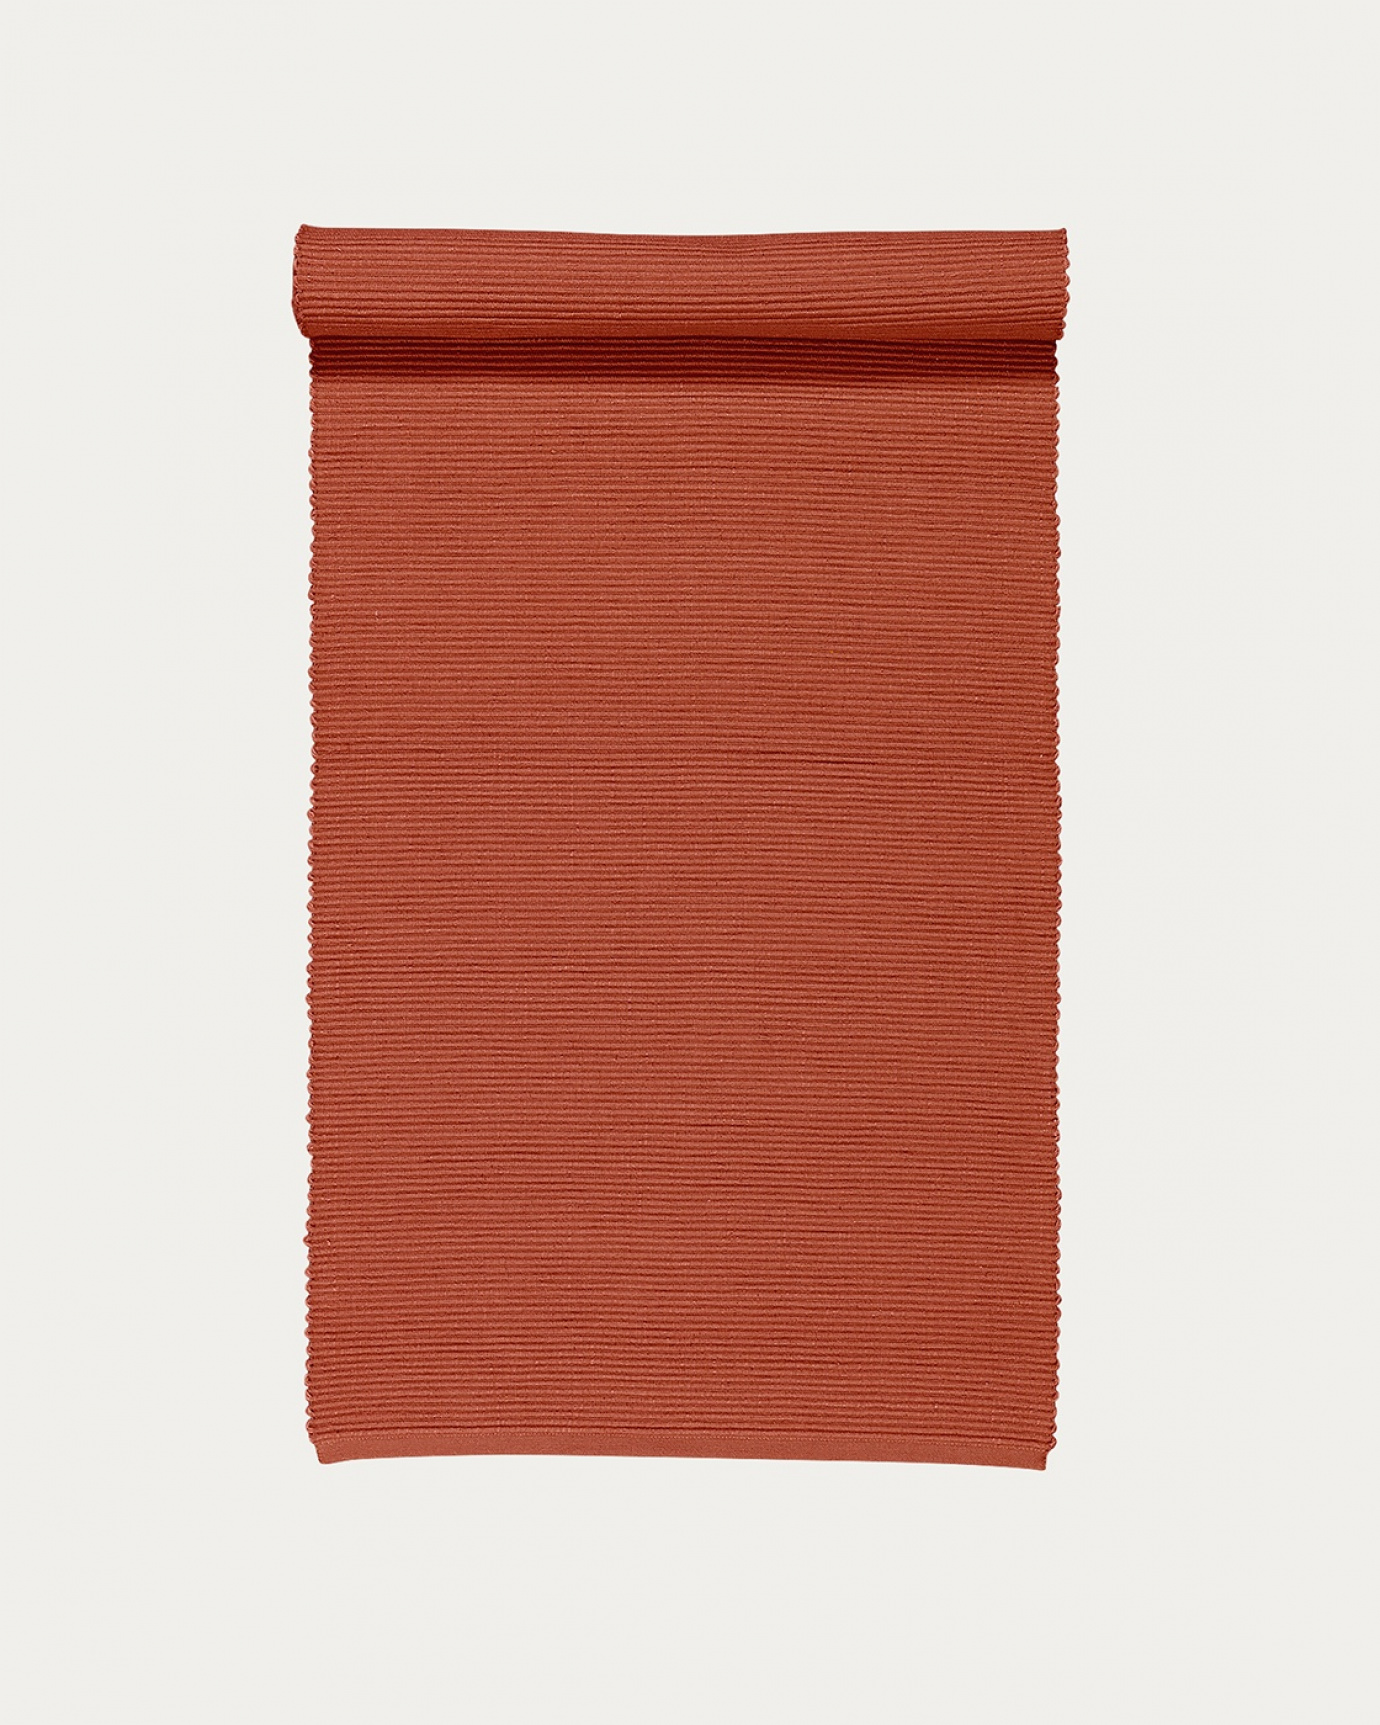 Produktbild rostorange UNI löpare av mjuk bomull i ribbad kvalité från LINUM DESIGN. Storlek 45x150 cm.